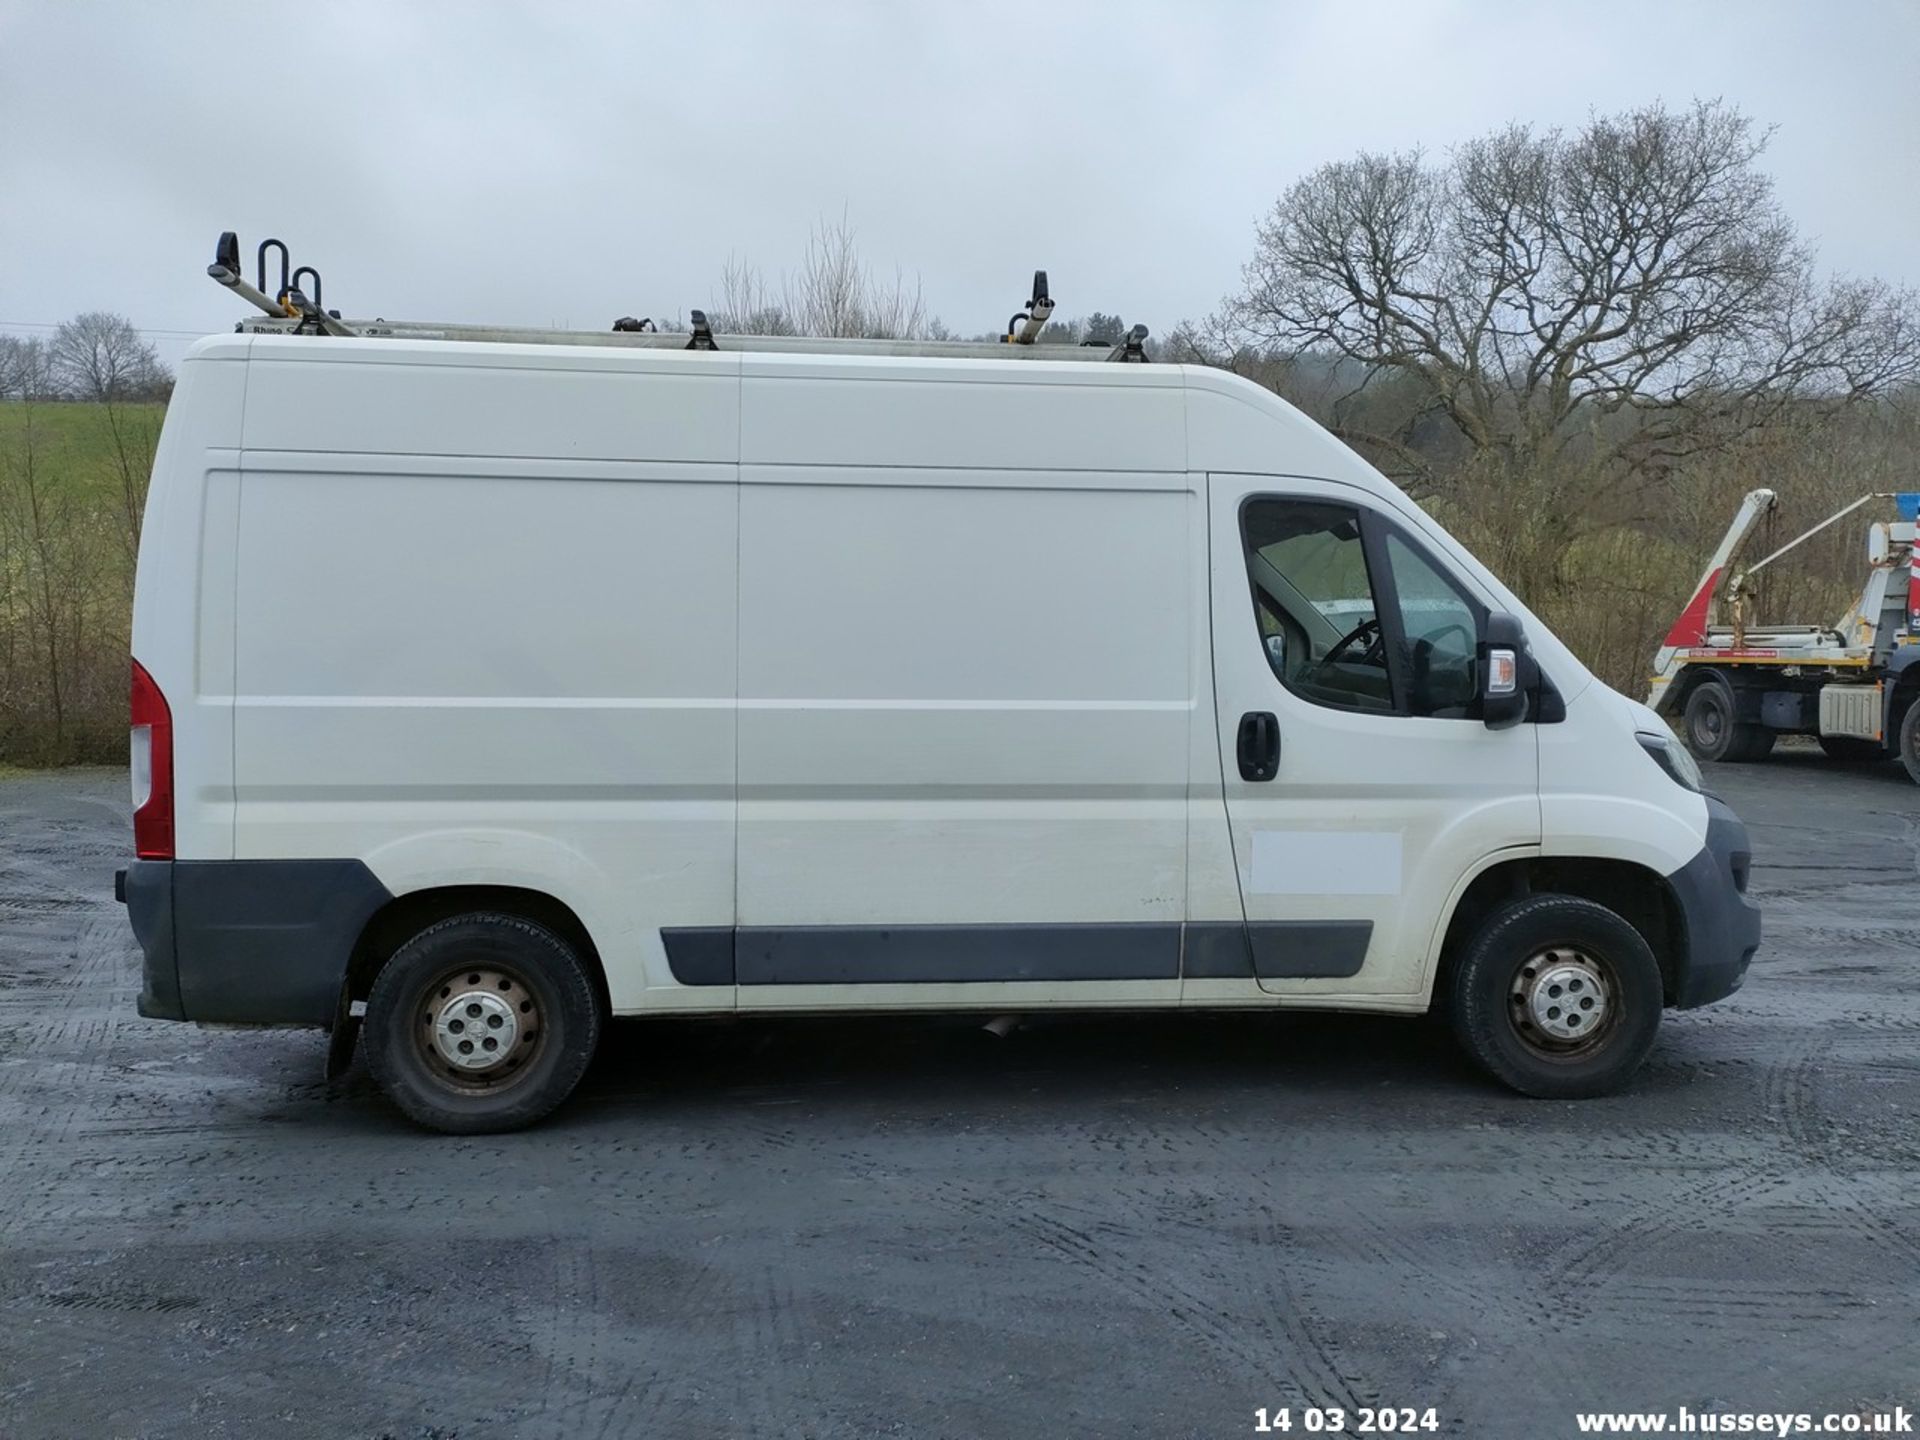 16/16 PEUGEOT BOXER 335 L2H2 HDI - 2198cc 5dr Van (White, 131k) - Image 43 of 62